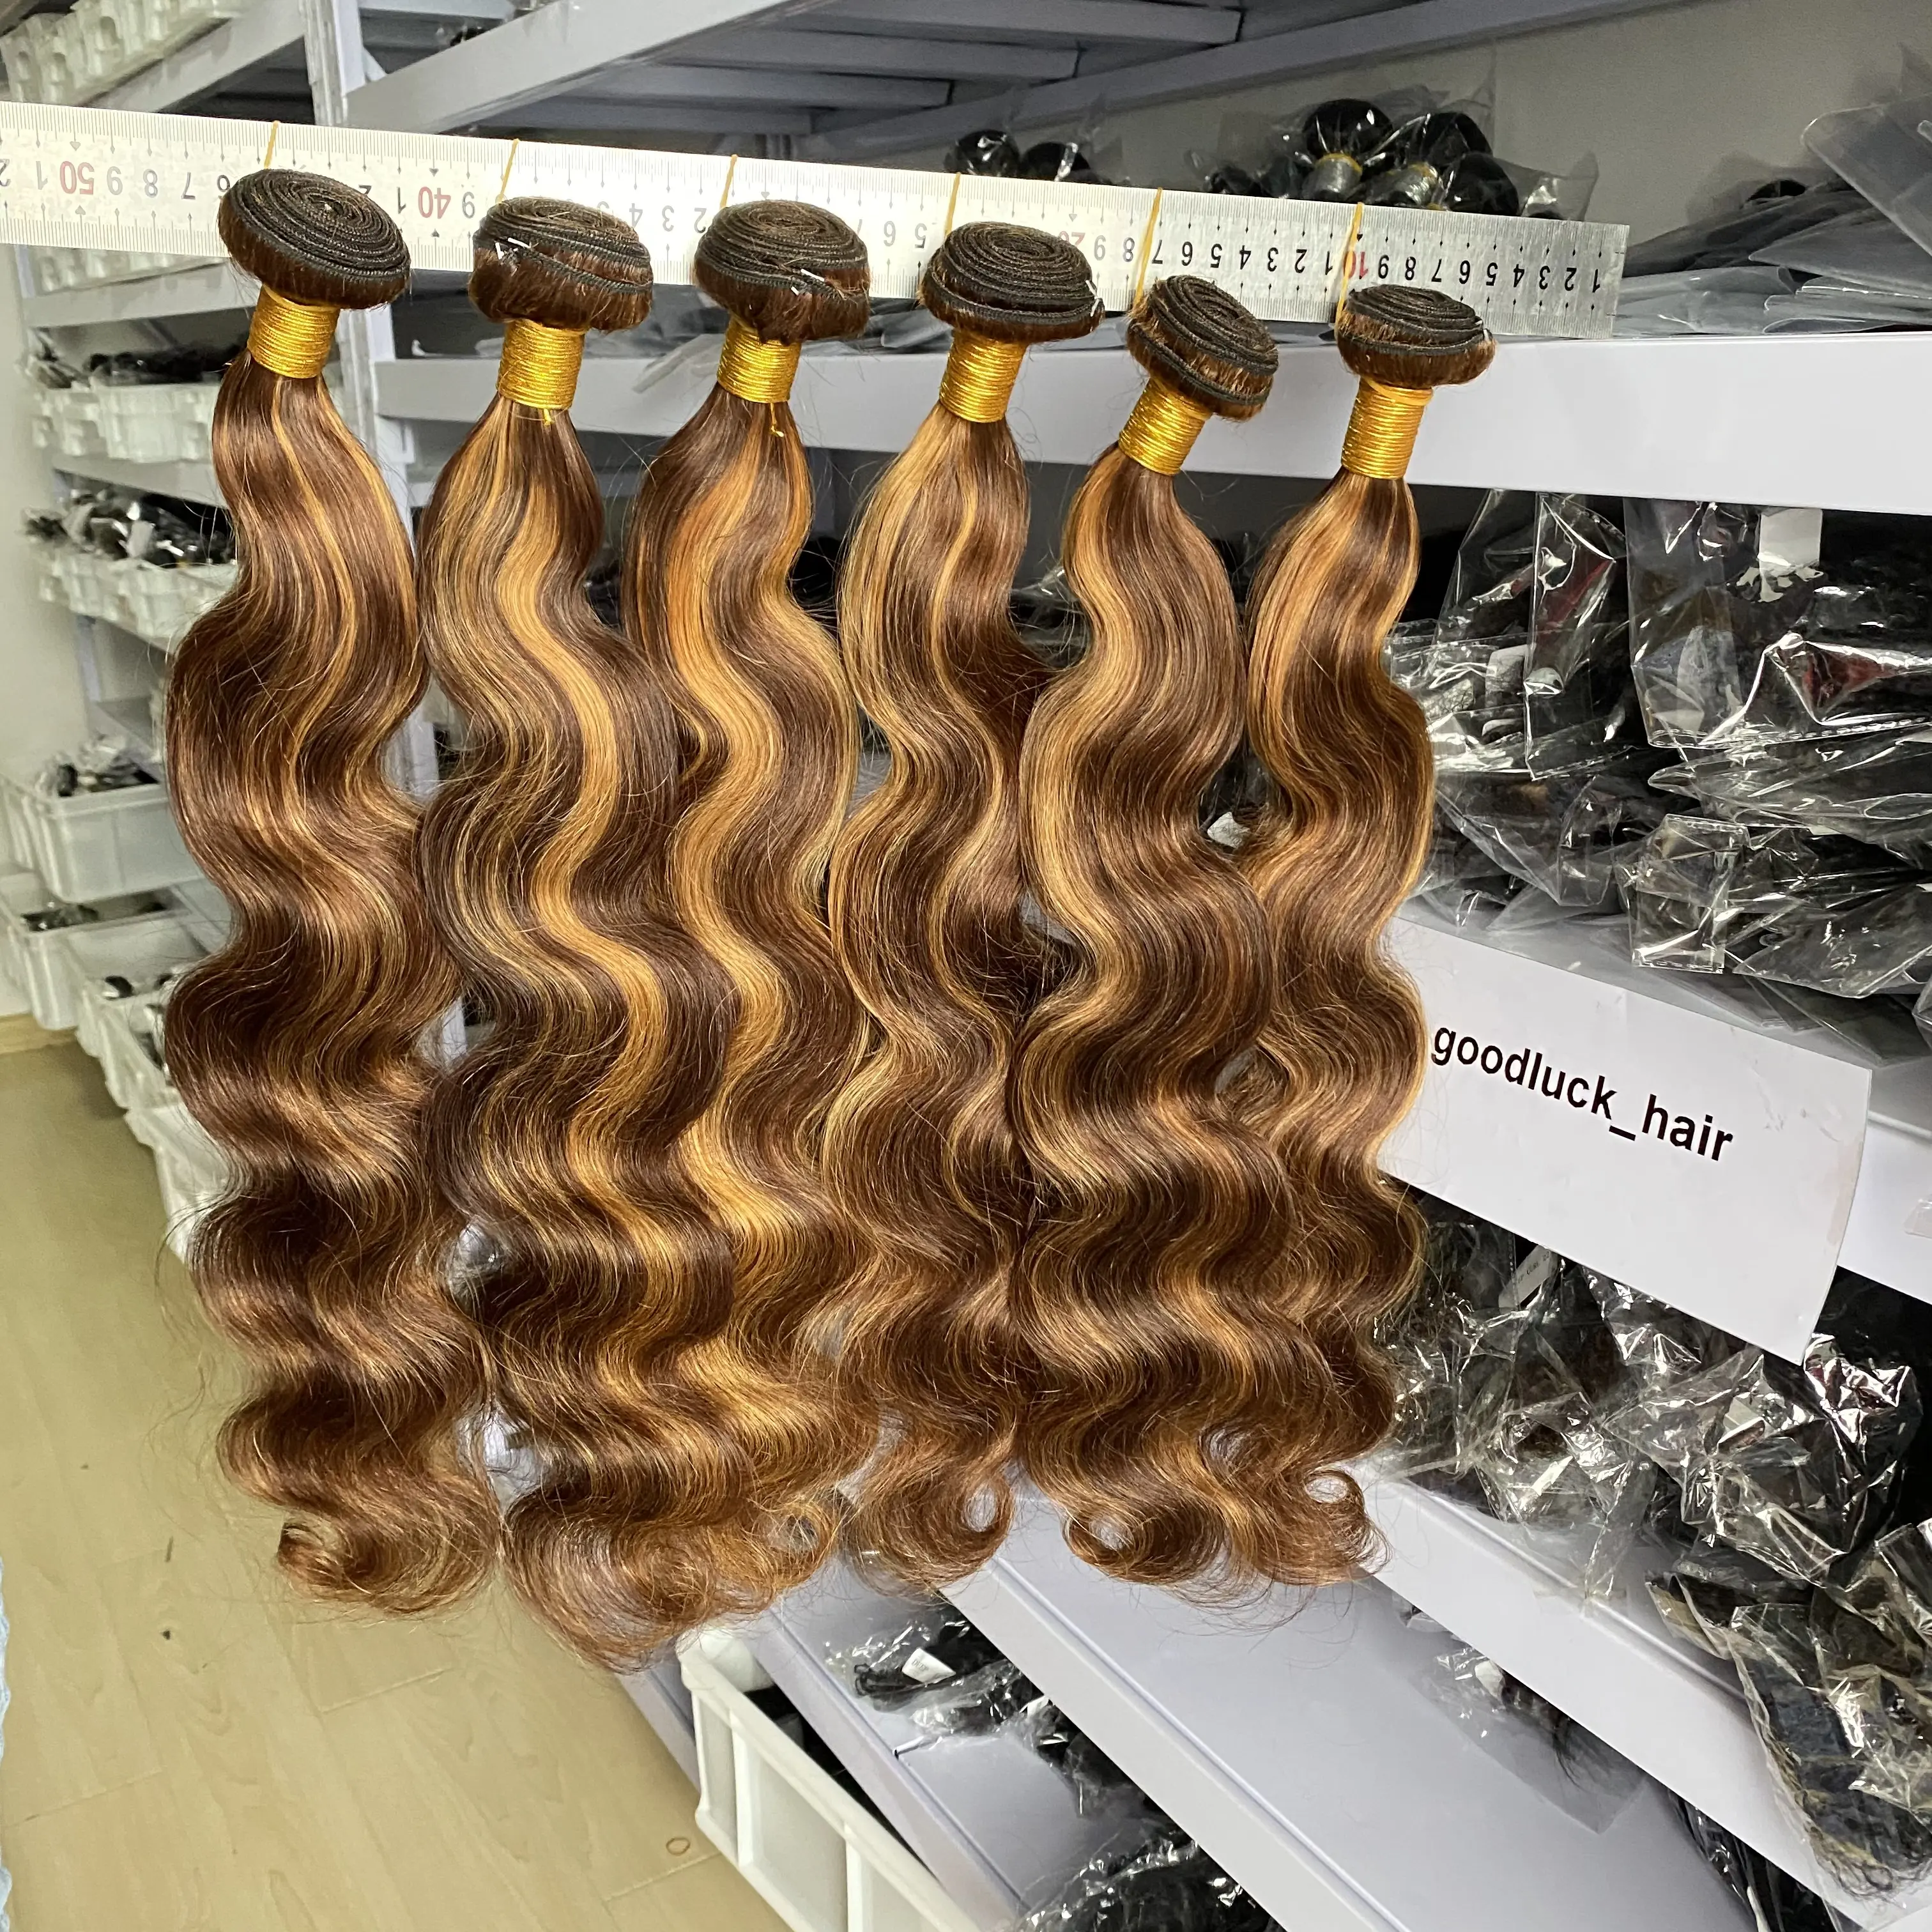 Goodluck 10-40inch long length 4/27 body wave straight virgin hair highlighted hair weave weaving extension bundle bundles